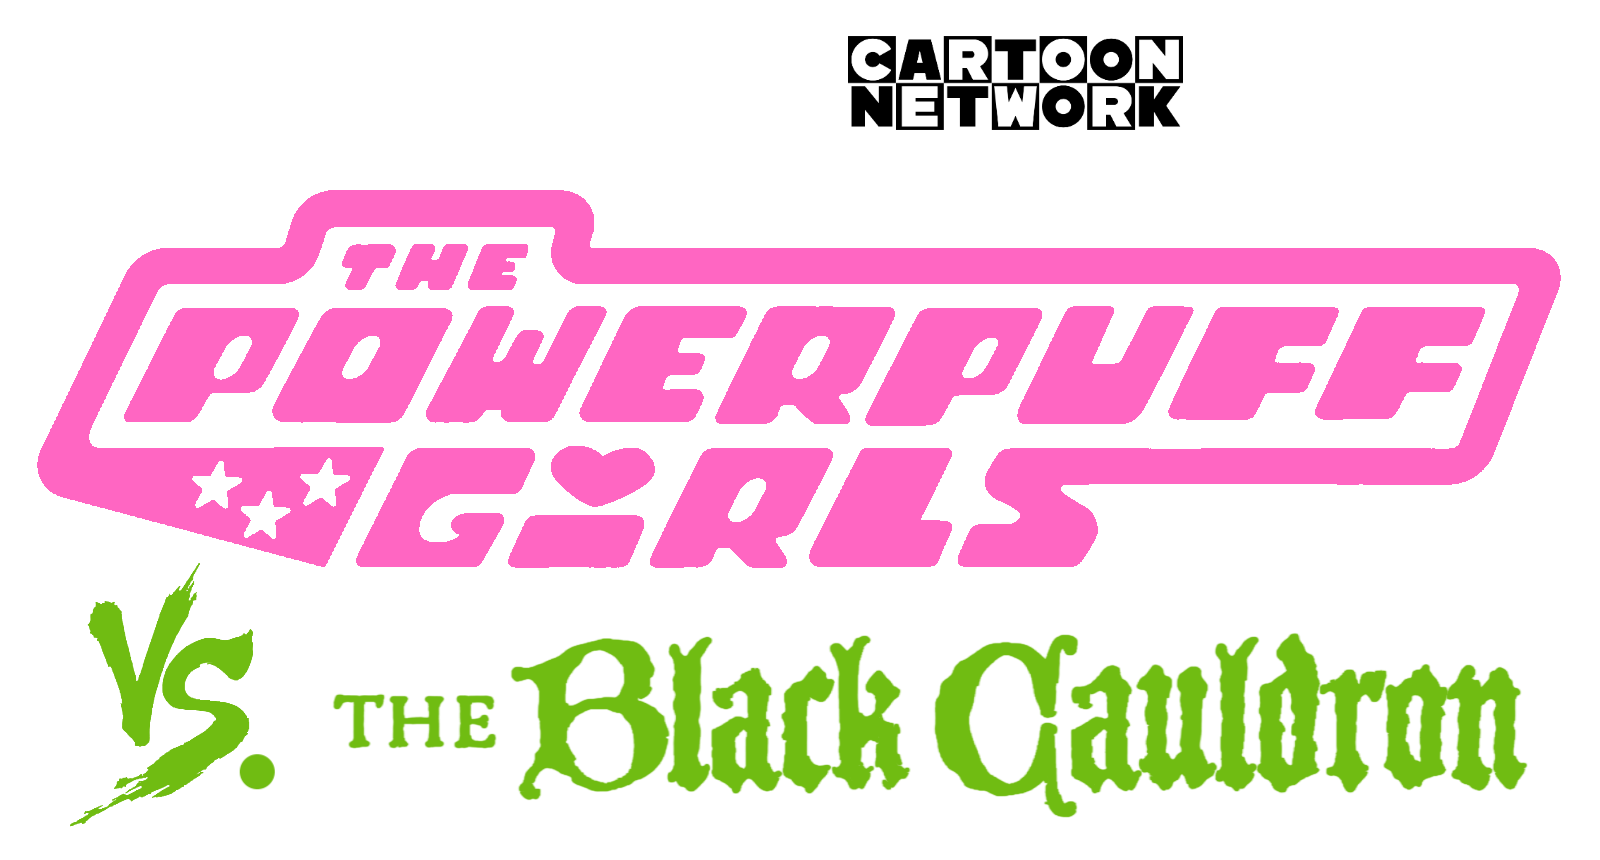 Disney - Cartoon Network PPG vs. TBC New Logo by TheMasterCreative on ...